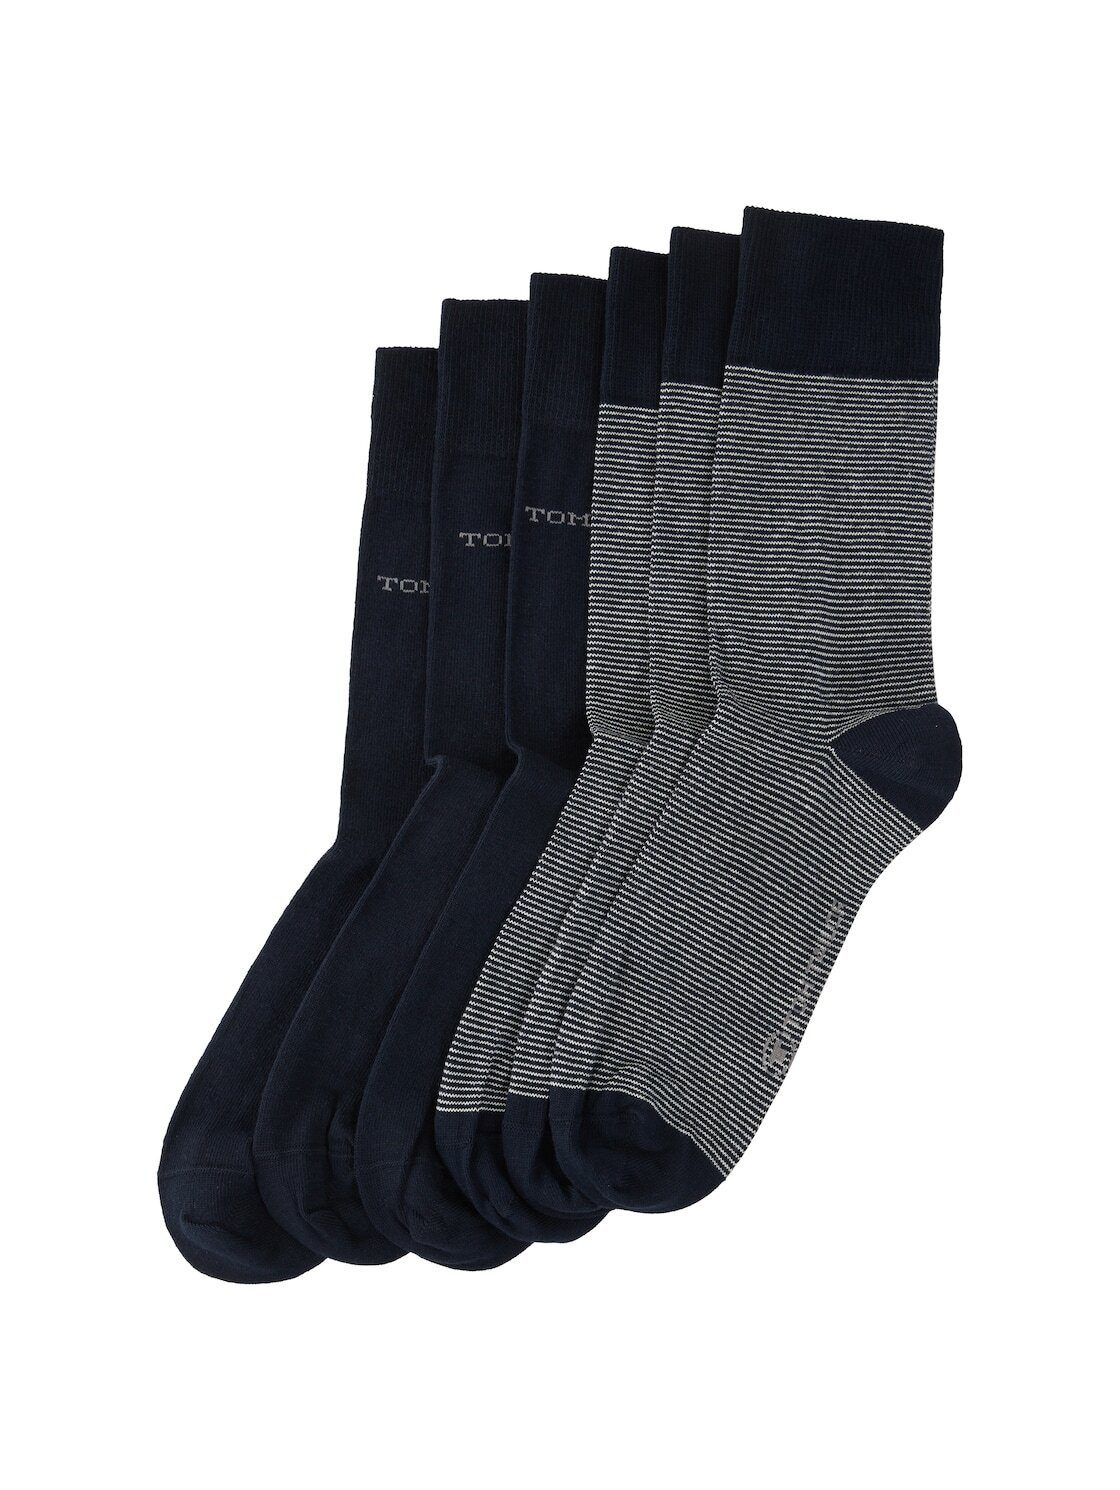 TOM TAILOR Socken Sechserpack Socken (im Sechserpack) | Socken